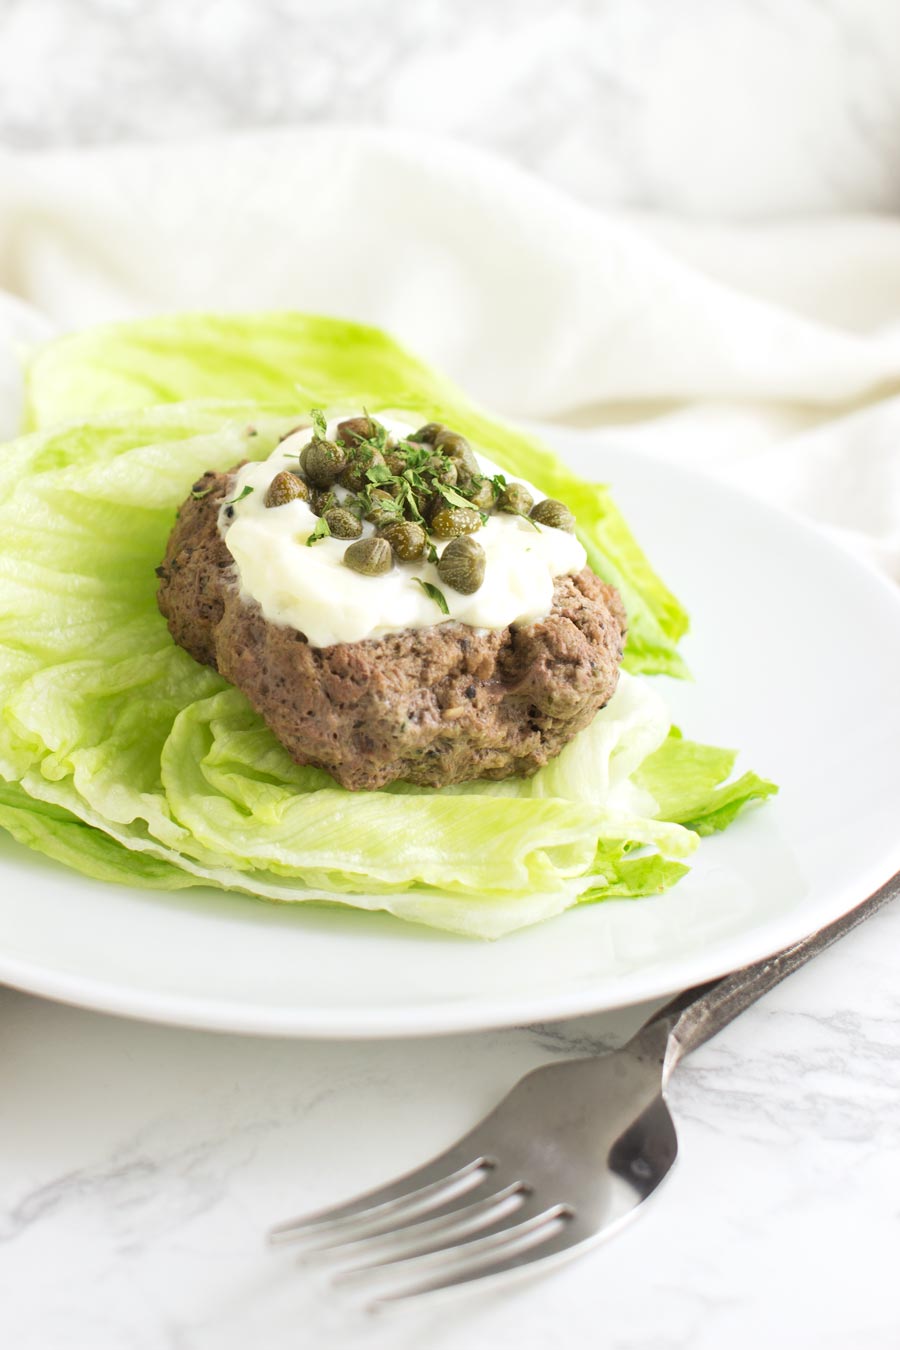 Greek Lamb Burgers recipe from acleanplate.com #paleo #aip #glutenfree